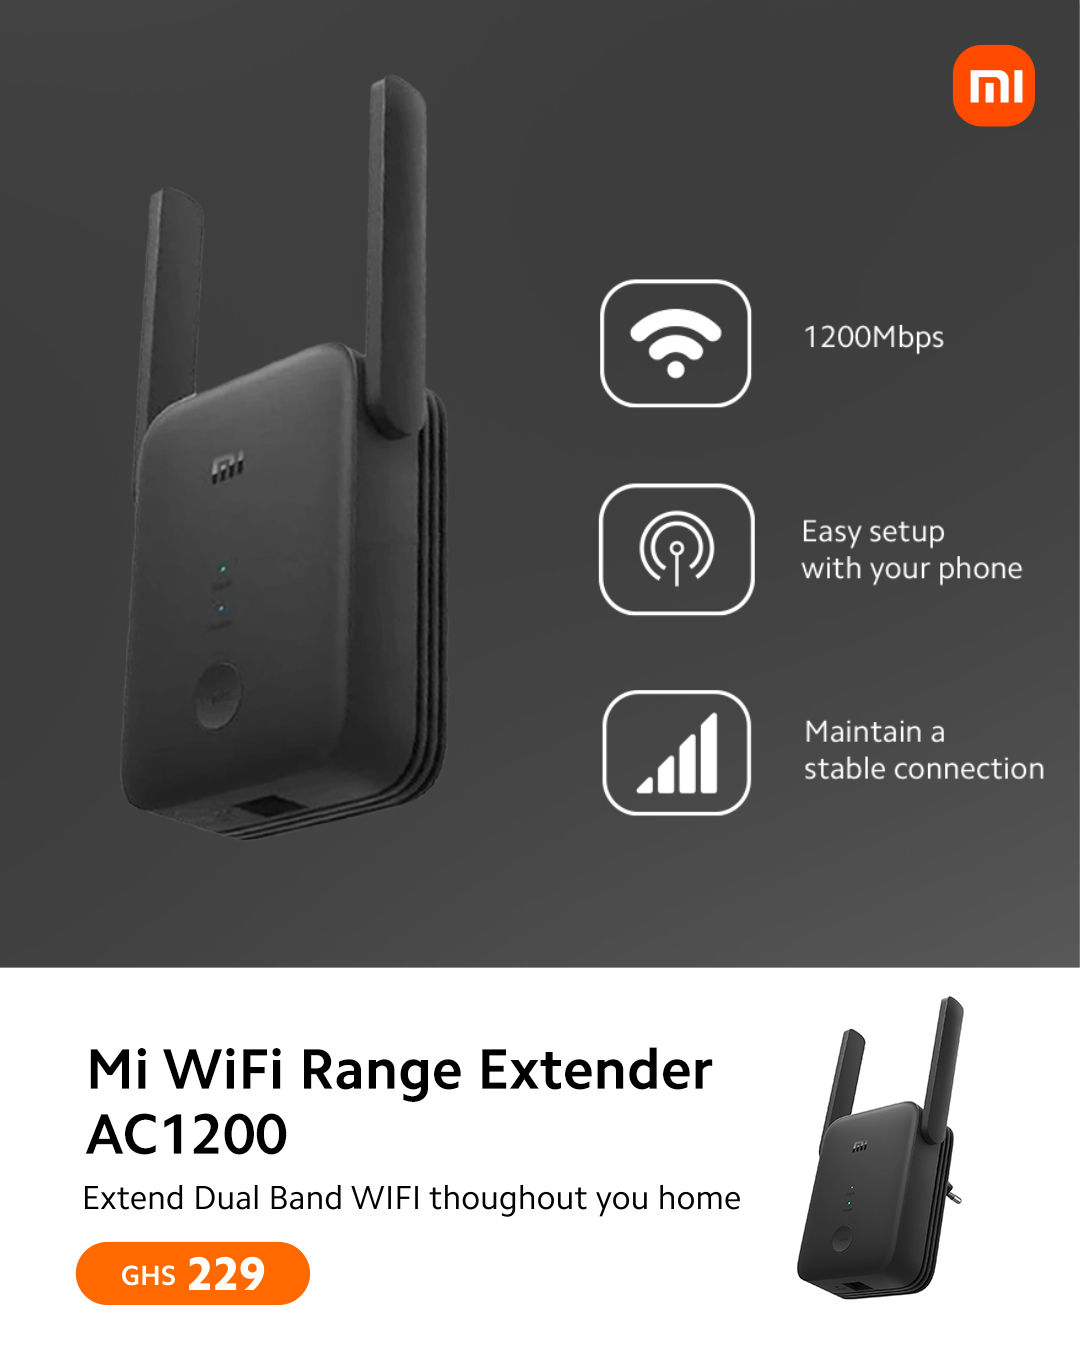 Xiaomi Ghana on X: Mi WiFi Range Extender AC1200 lets you